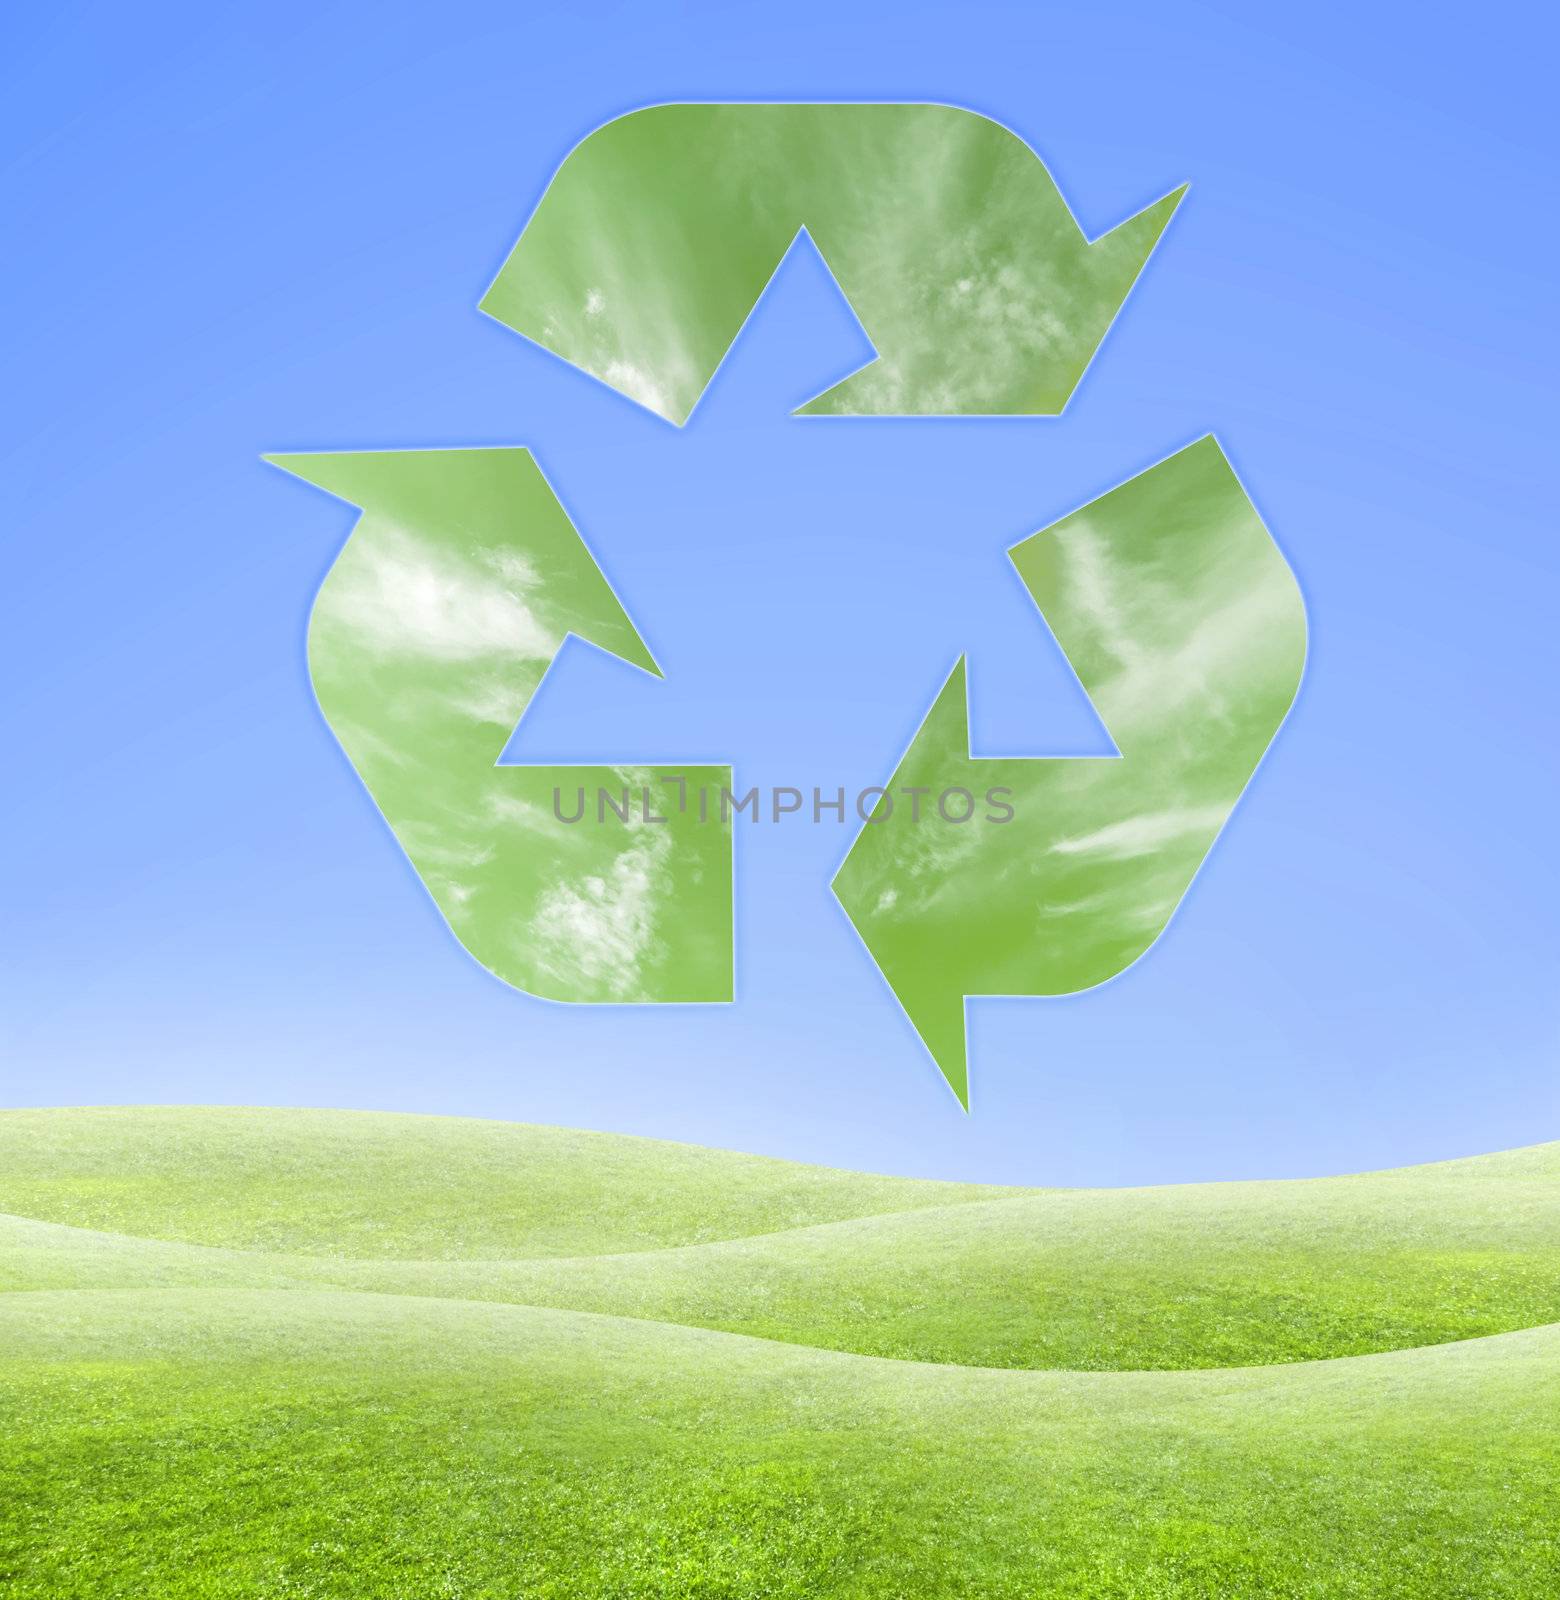 Ecology recycling symbol by domencolja